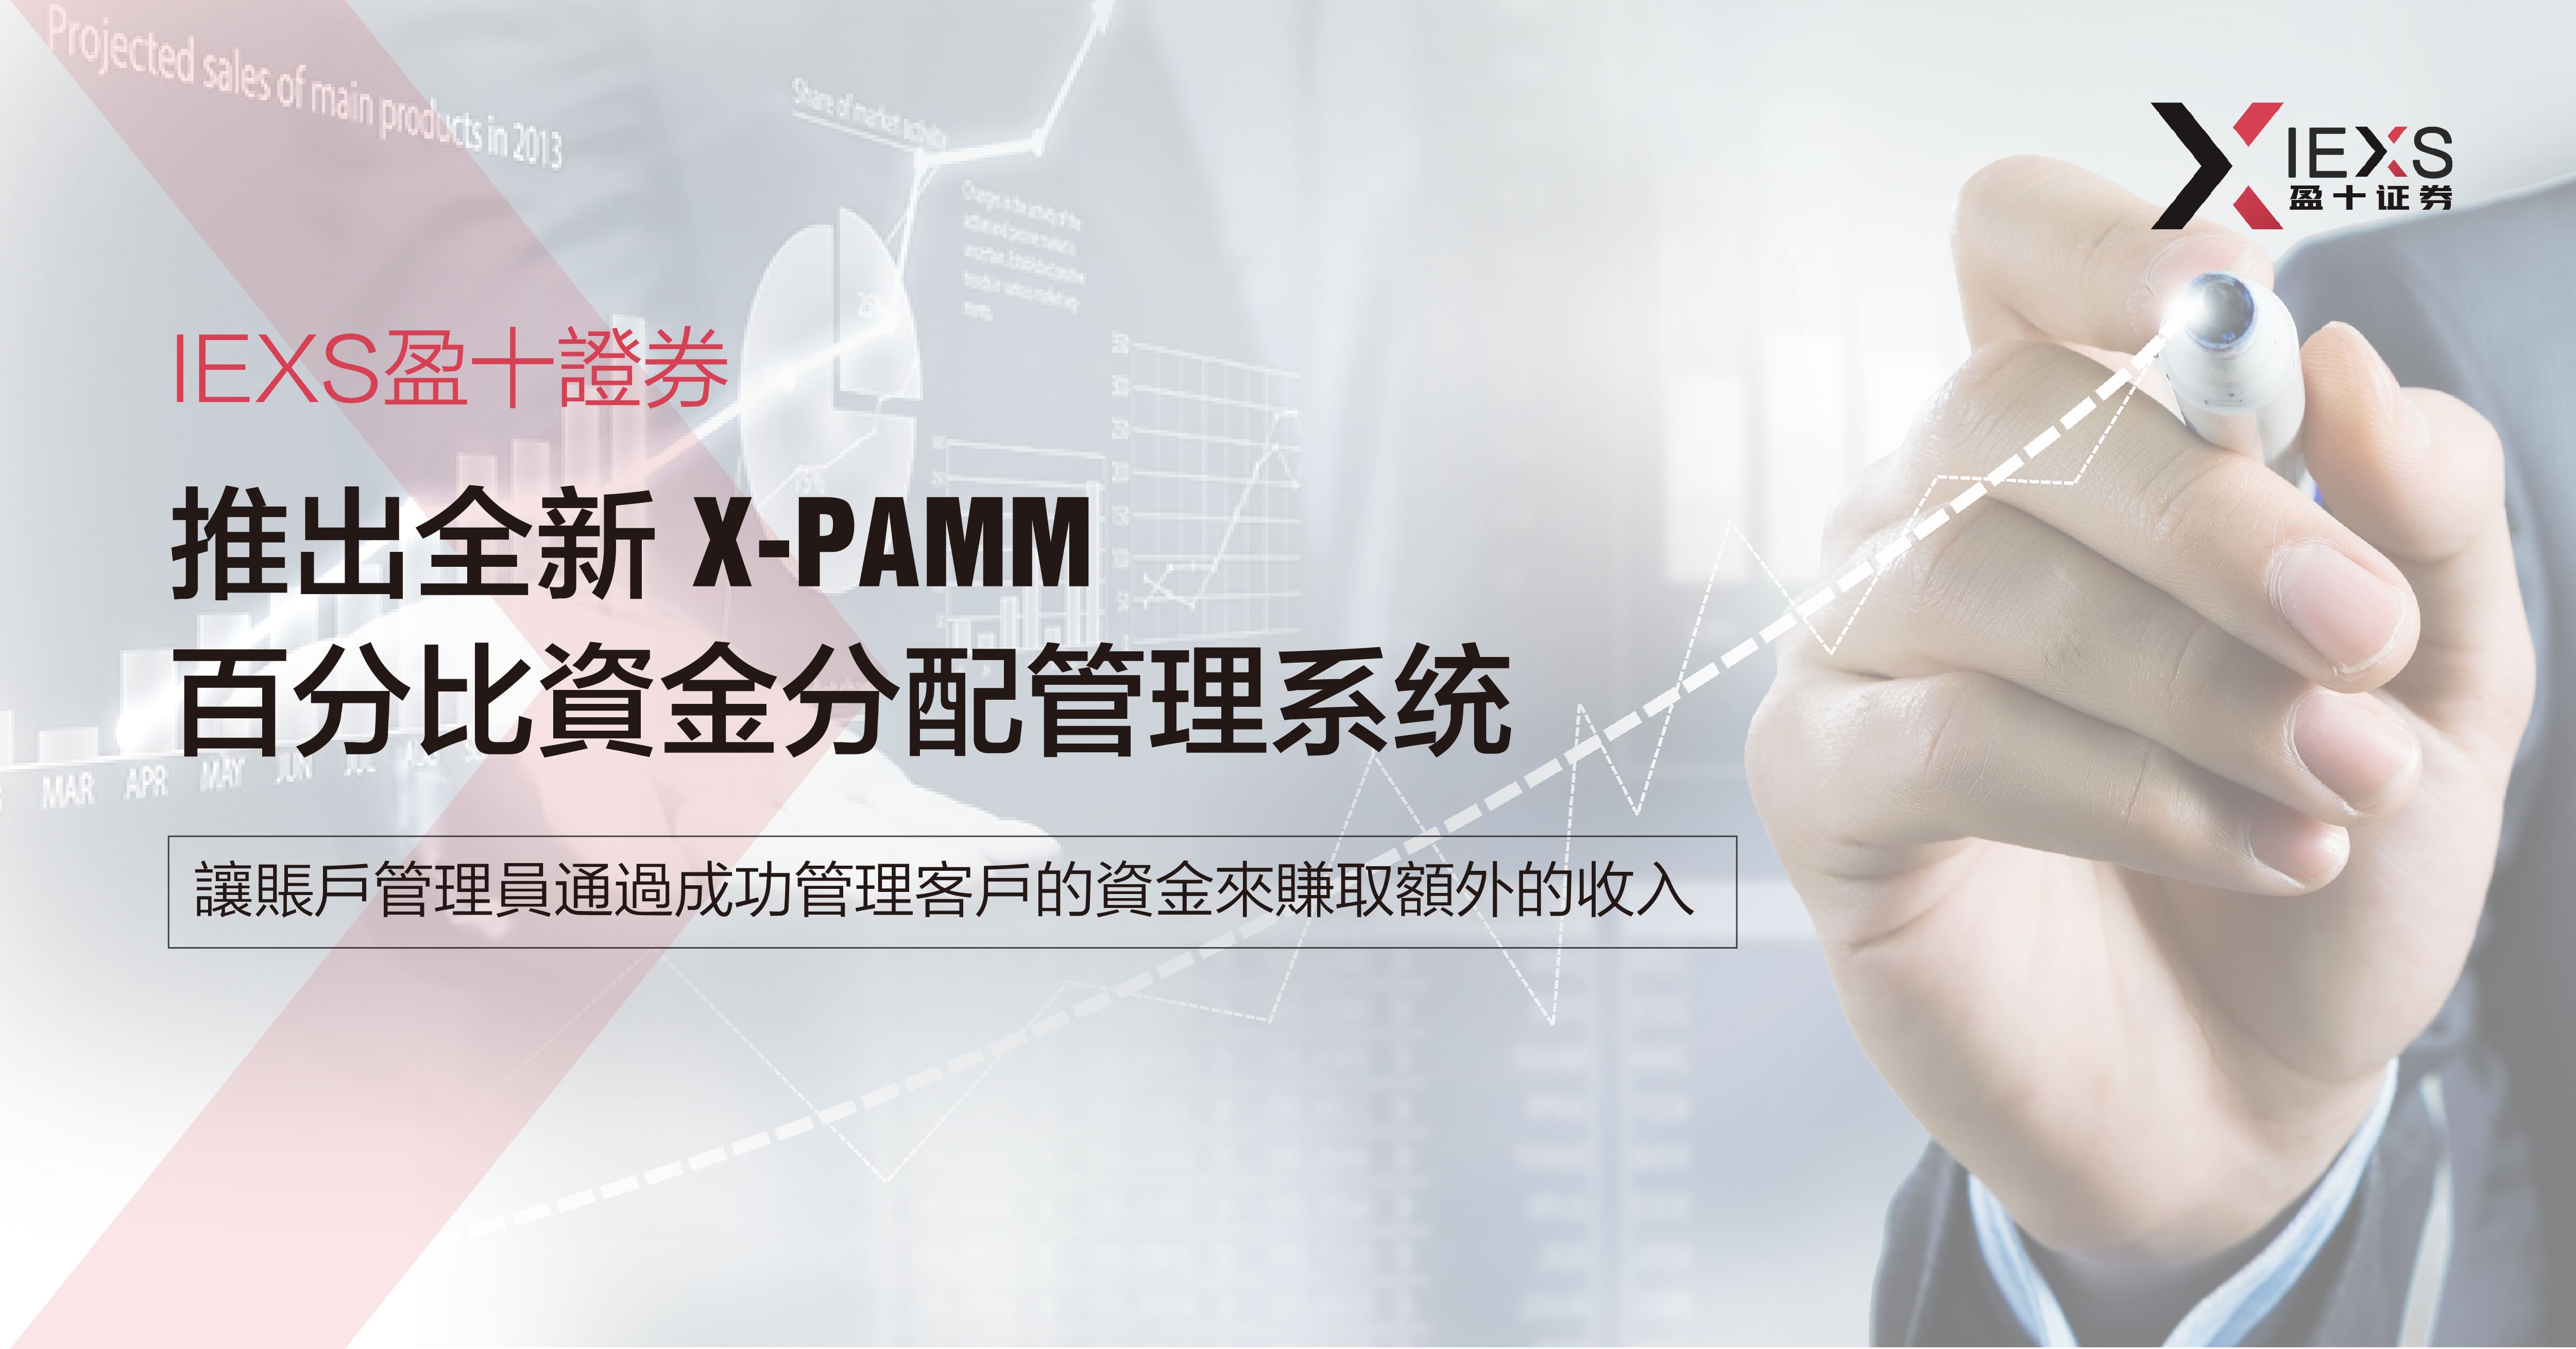 pamm宣传图 (1).jpg